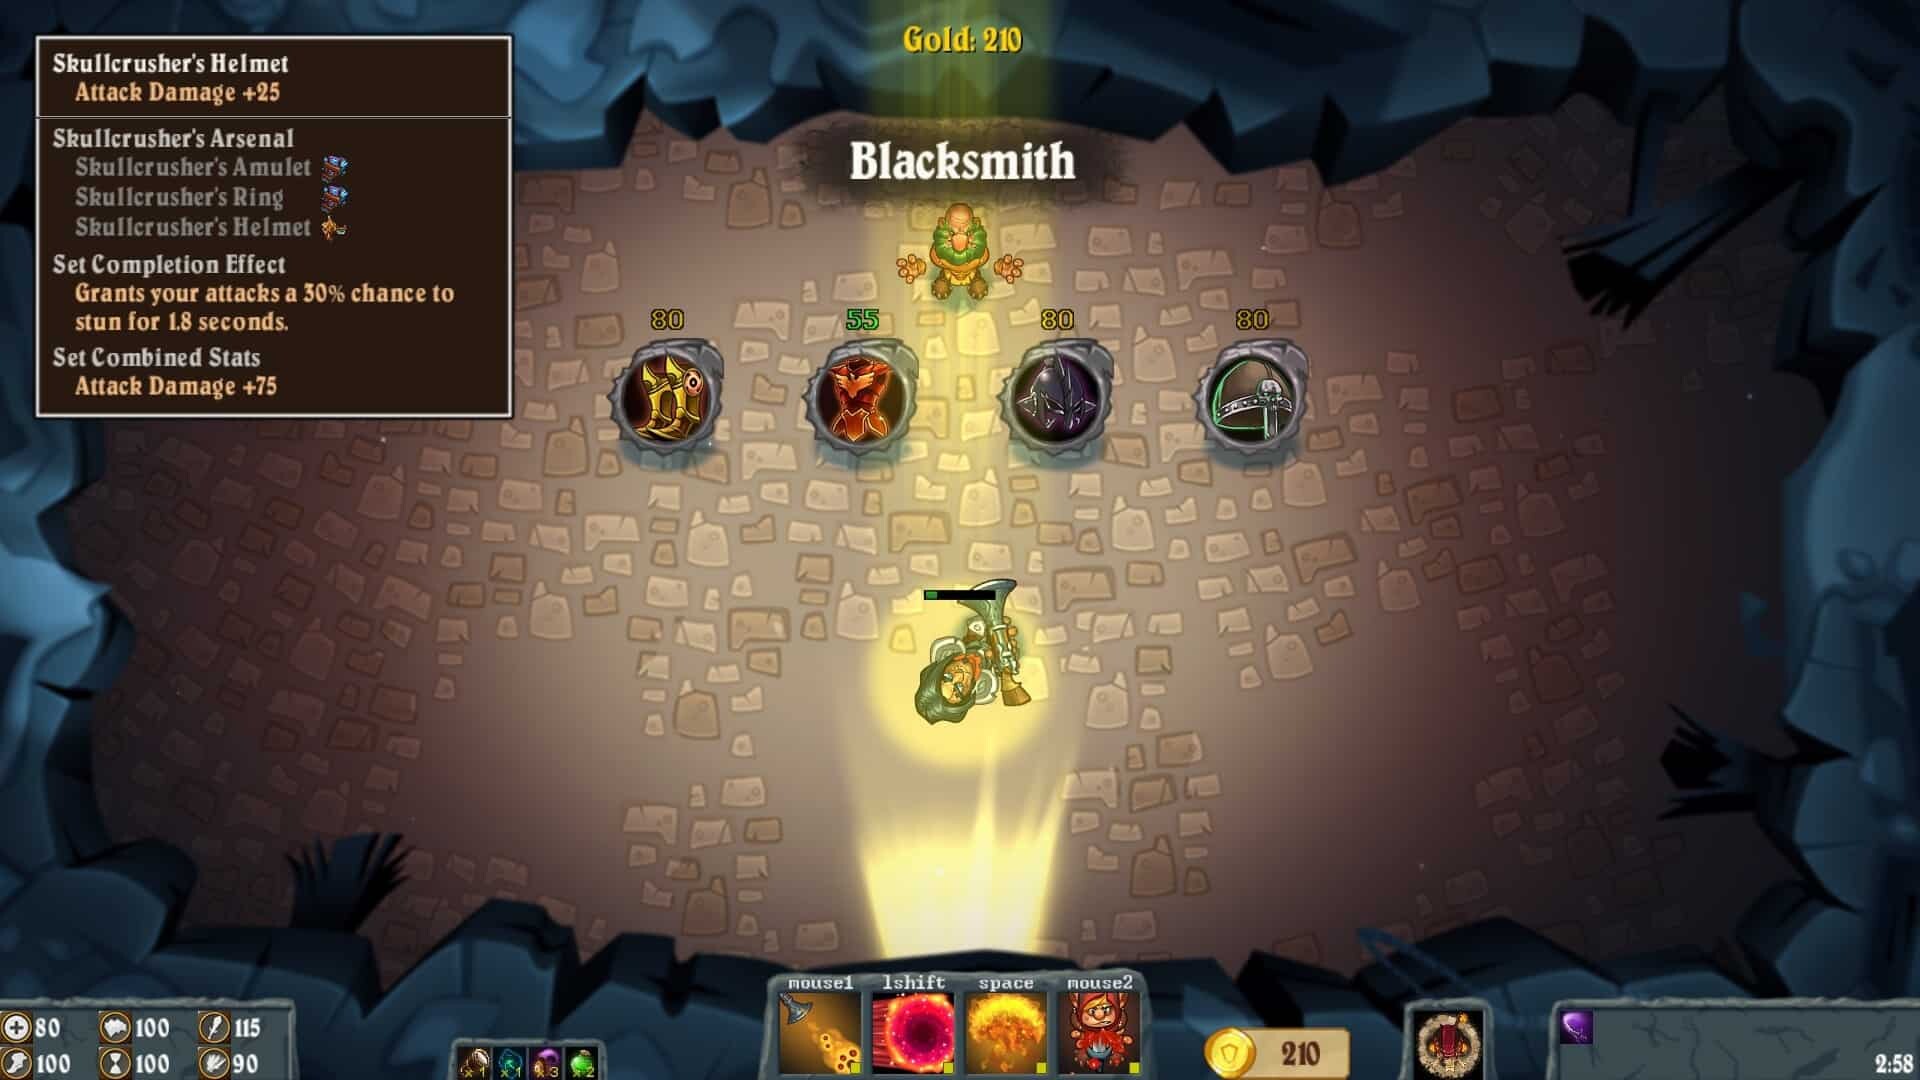 Flamebreak game screenshot, blacksmith